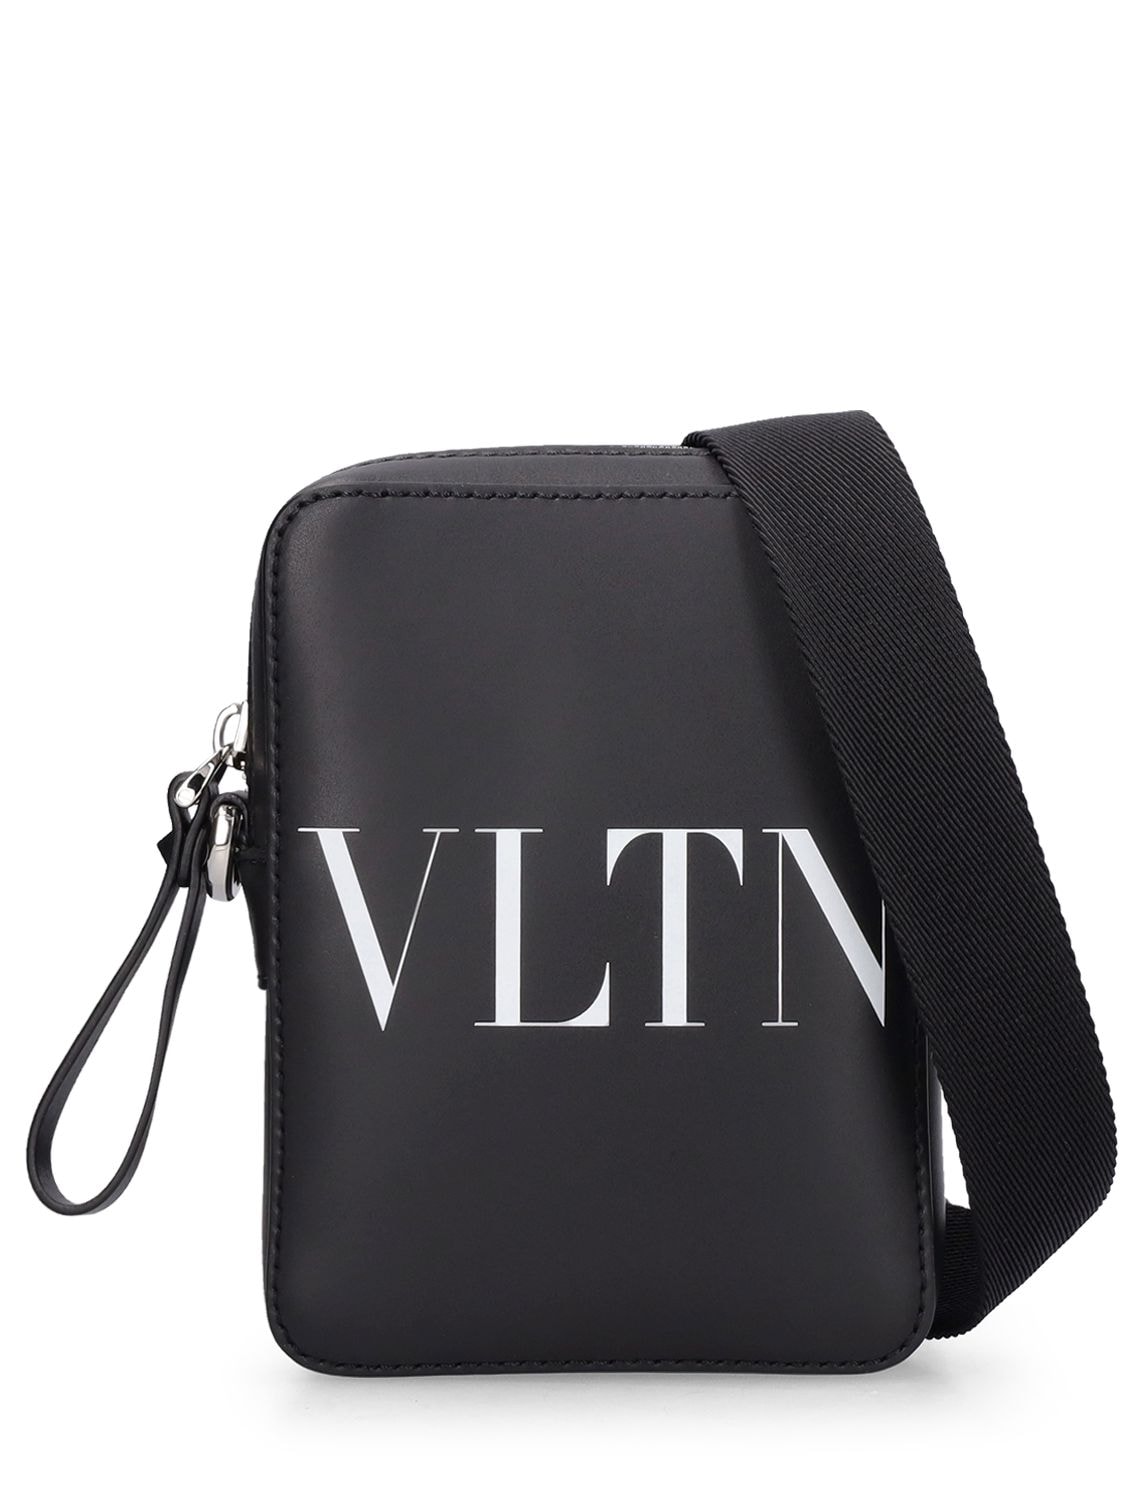 Image of Vltn Small Leather Crossbody Bag